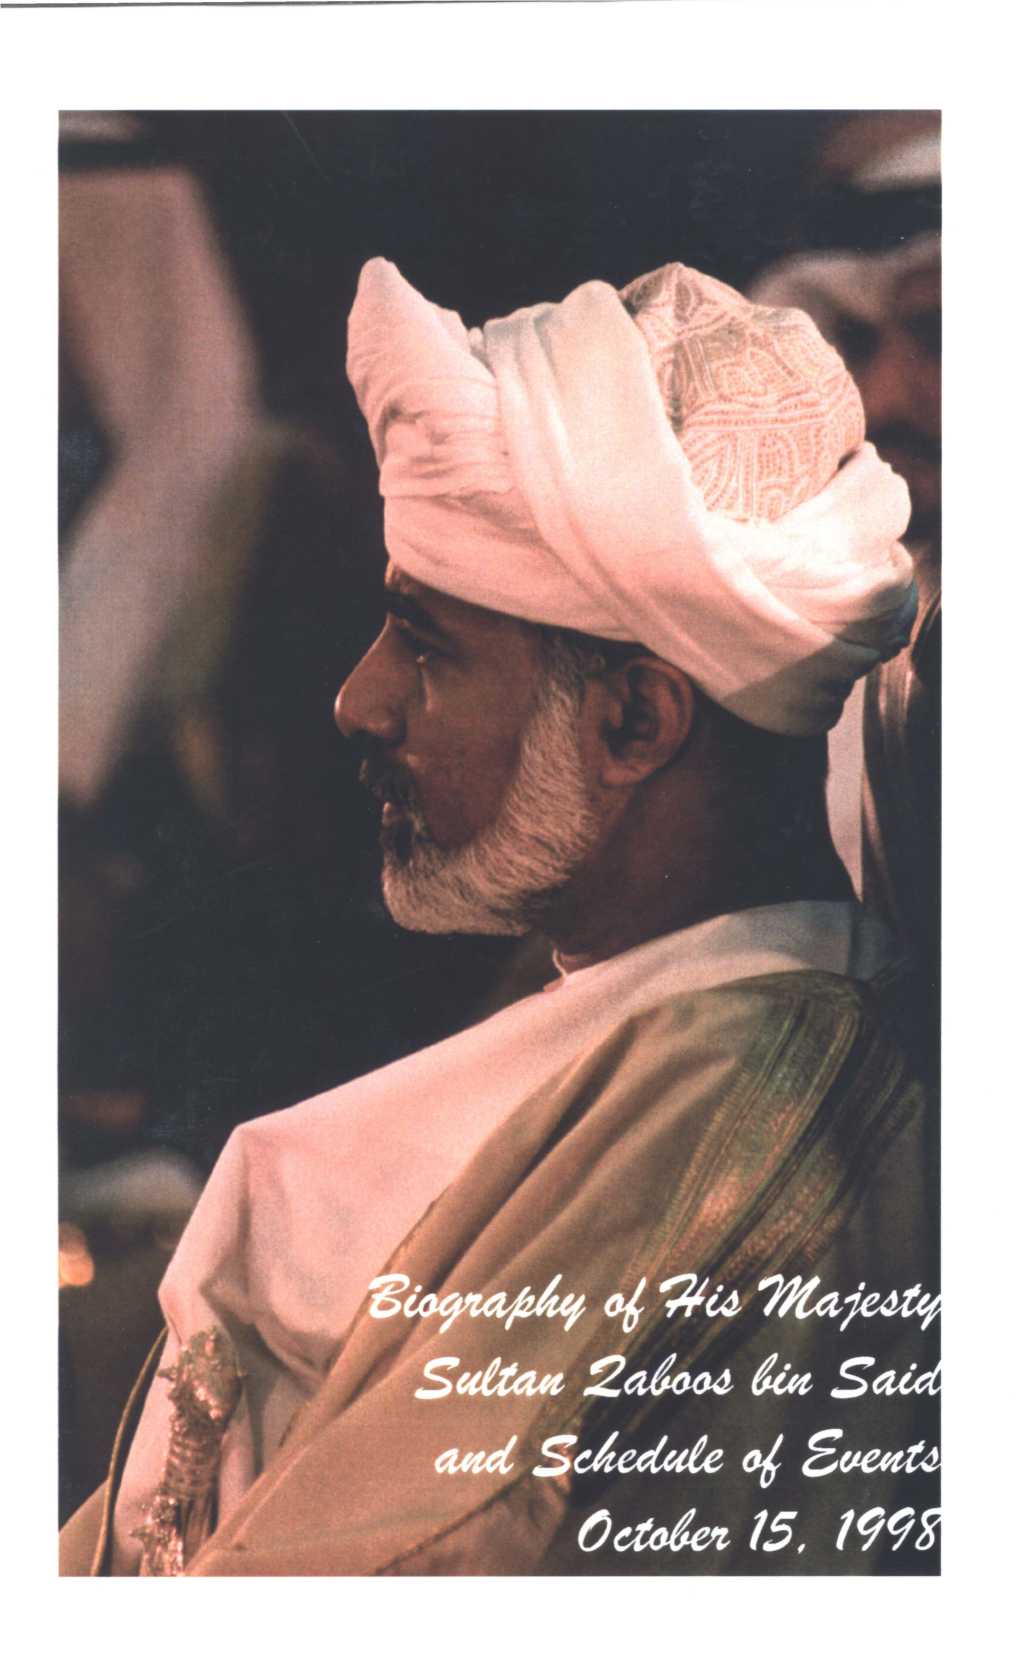 Biography of His Majesty Sultan Qaboos Bin Said